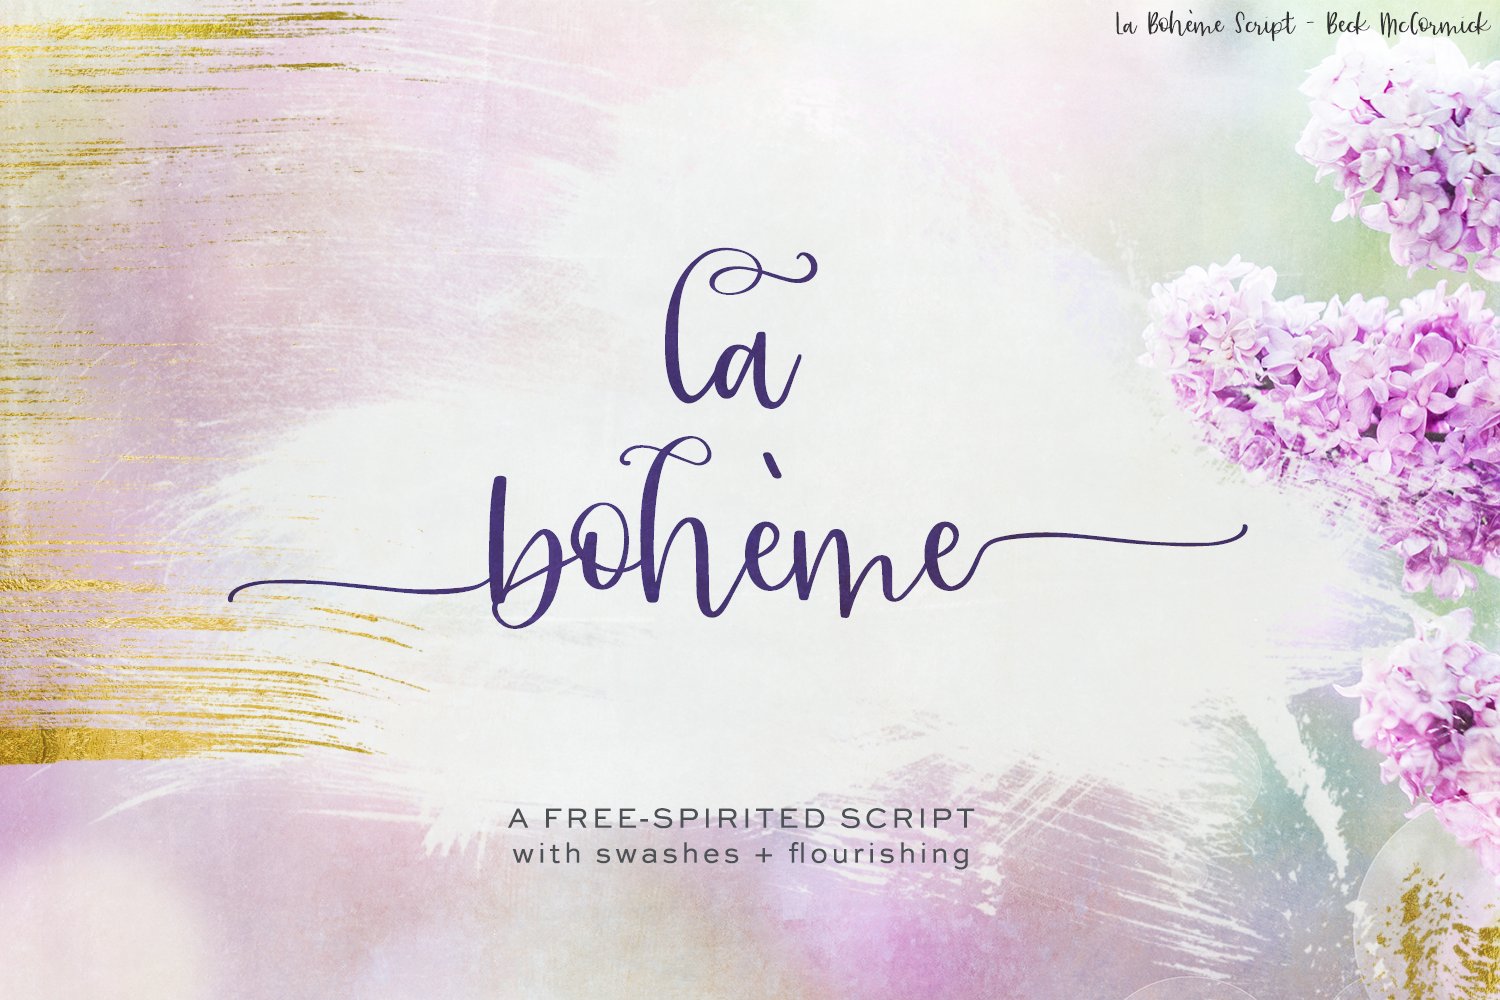 La Boheme Script cover image.